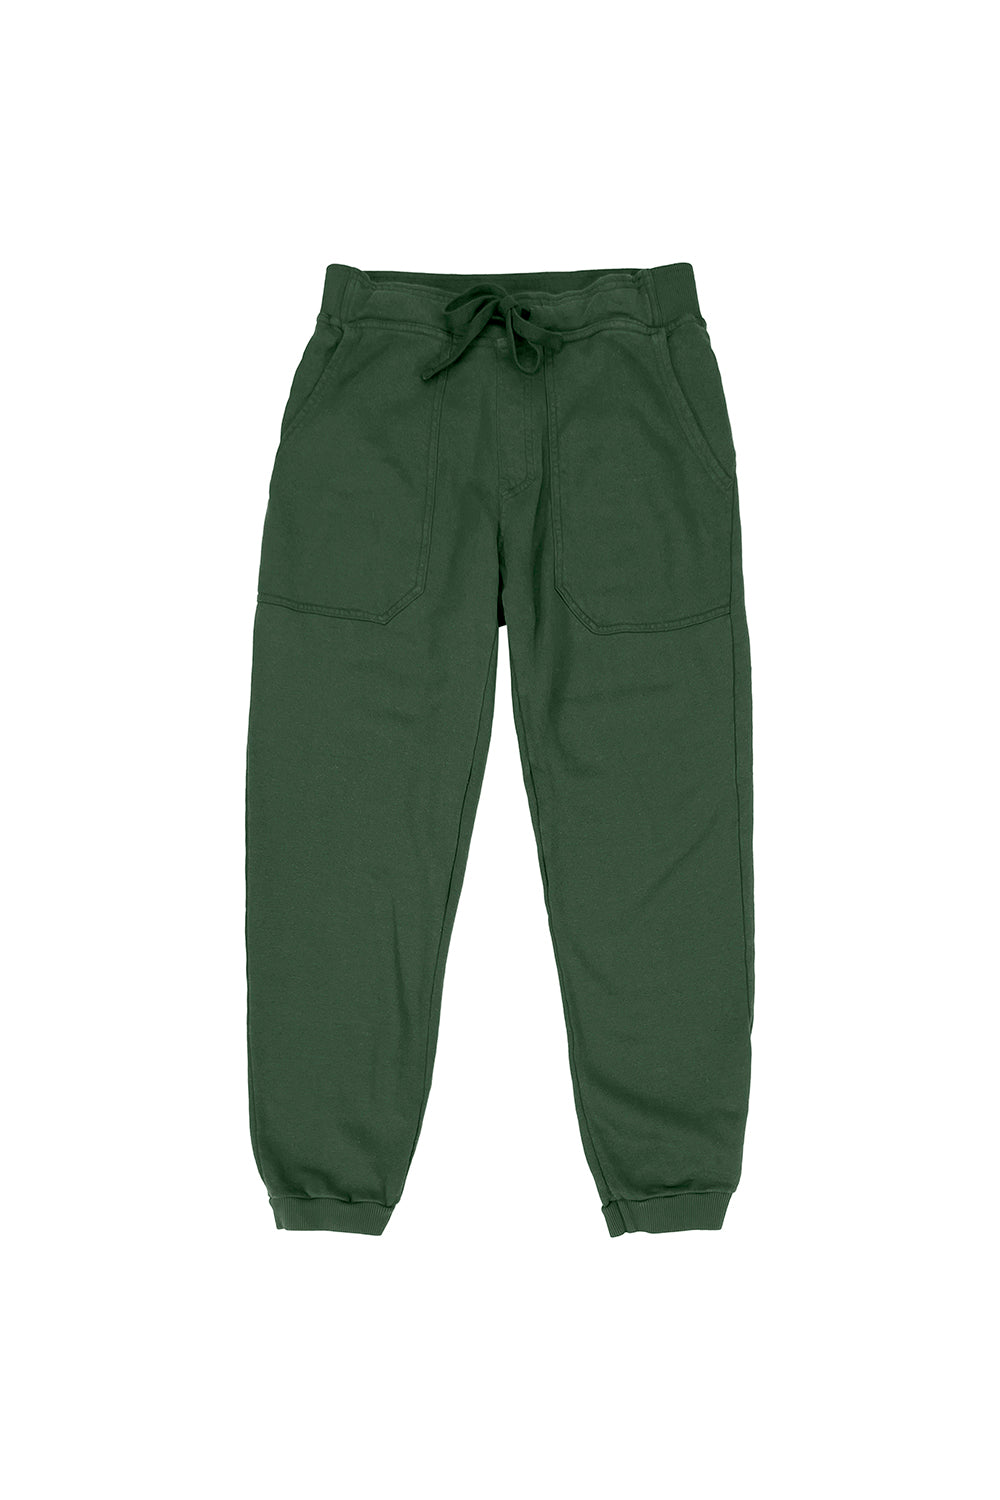 Rockaway Sweatpant | Jungmaven Hemp Clothing & Accessories / Color: Hunter Green